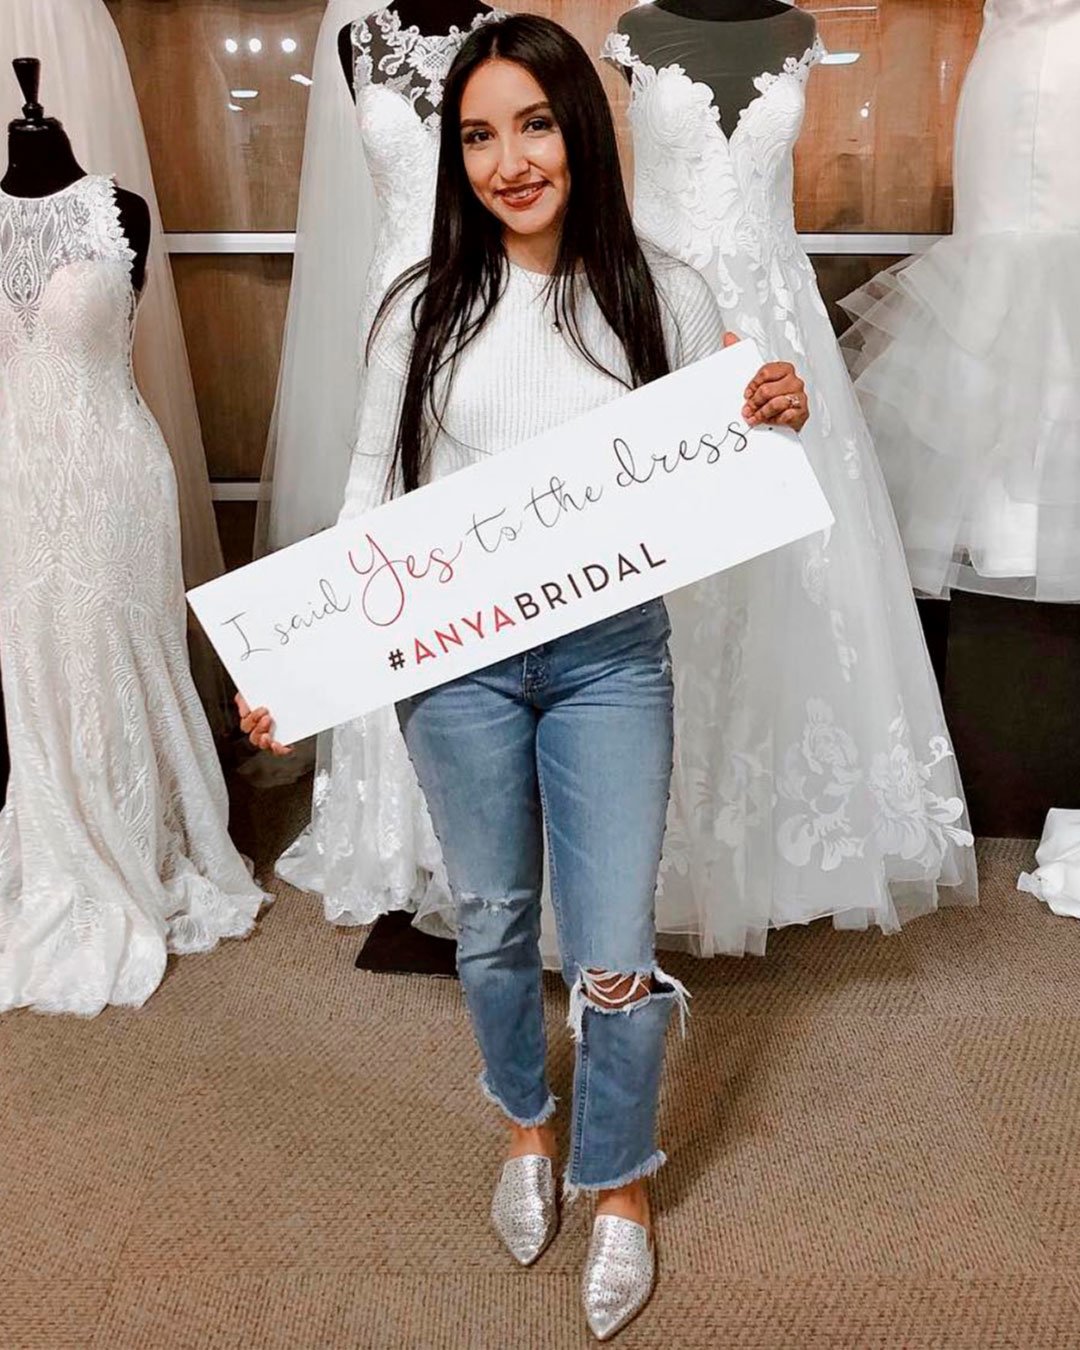 best bridal salons in atlanta bride dress designs sign